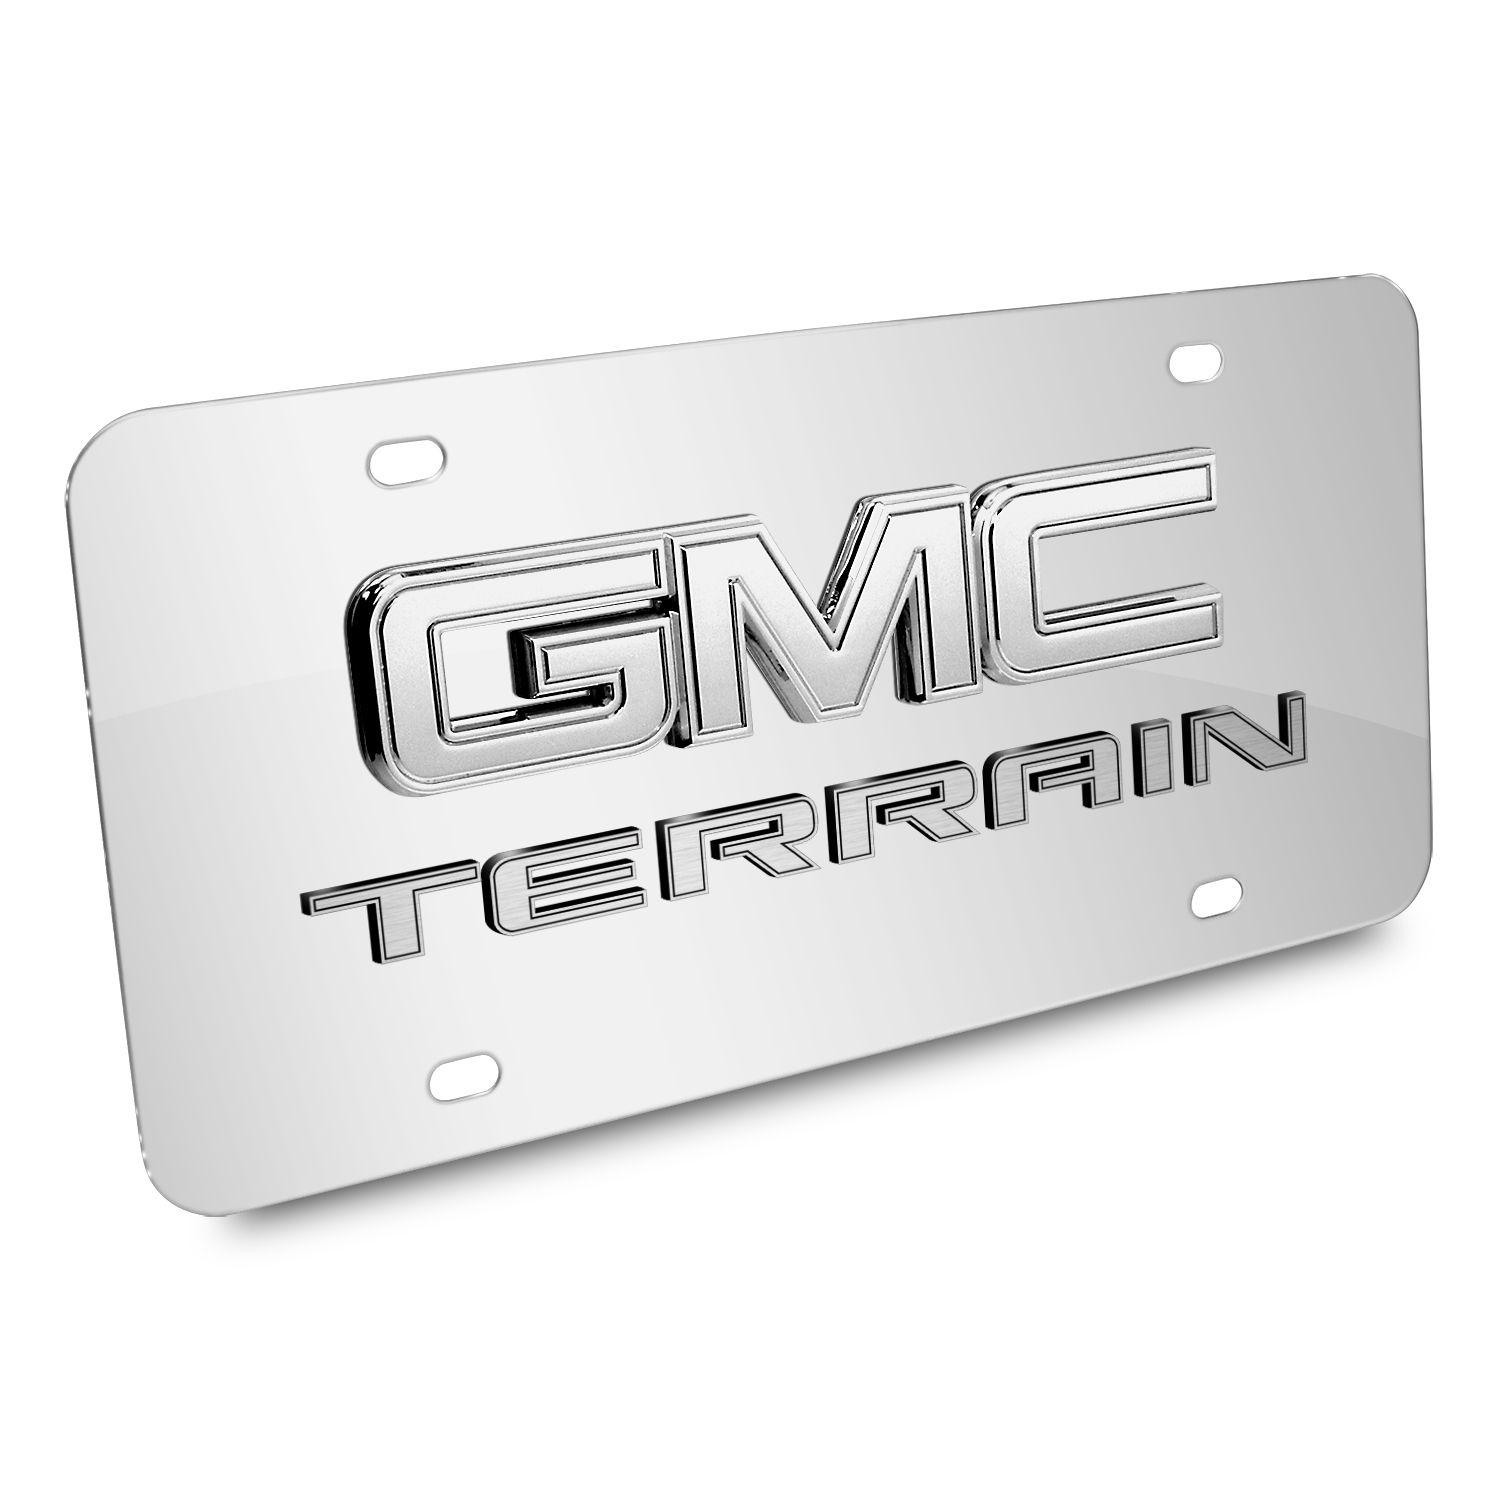 GMC Terrain Logo - GMC - License Plates